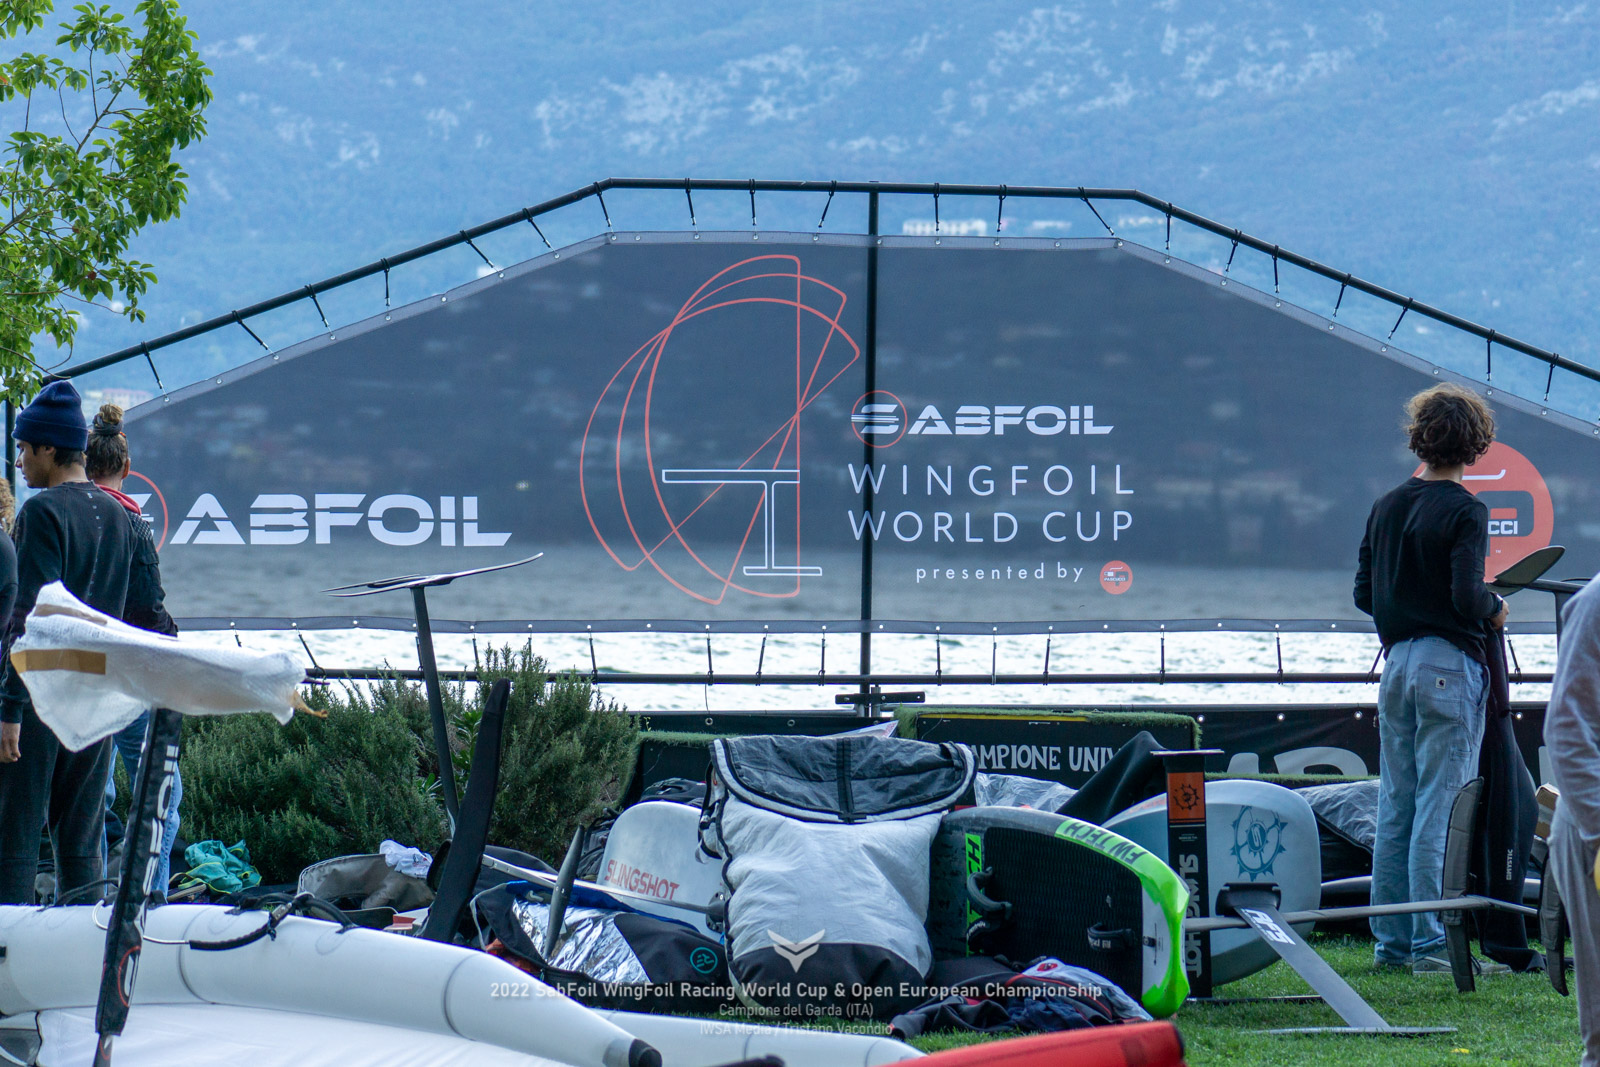 SABFOIL 2022 WINGFOIL RACING WORLD CUP & OPEN EUROPEAN CHAMPIONSHIPS CAMPIONE DEL GARDA (ITA) Tristano Vacondio - IWSA - DSC09632105 - 2022 WingFoil Racing World Cup Series Garda